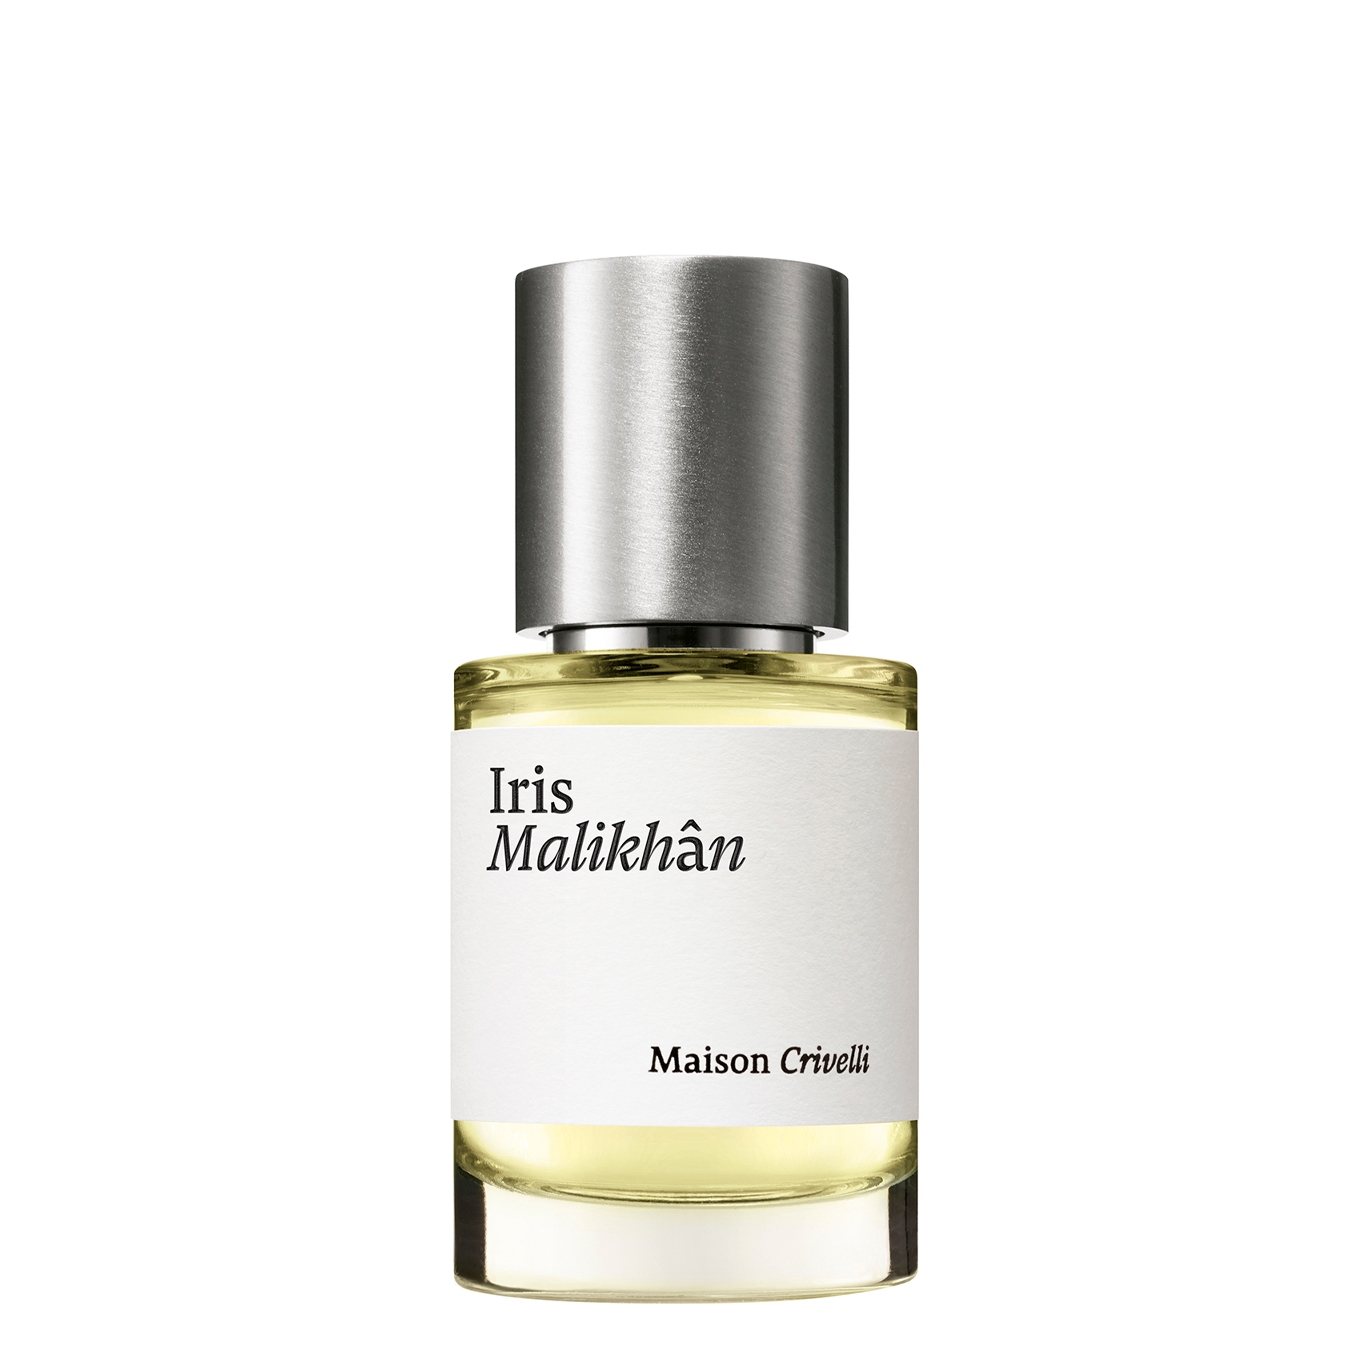 Maison Crivelli Iris Malikhan Eau De Parfum 30ml